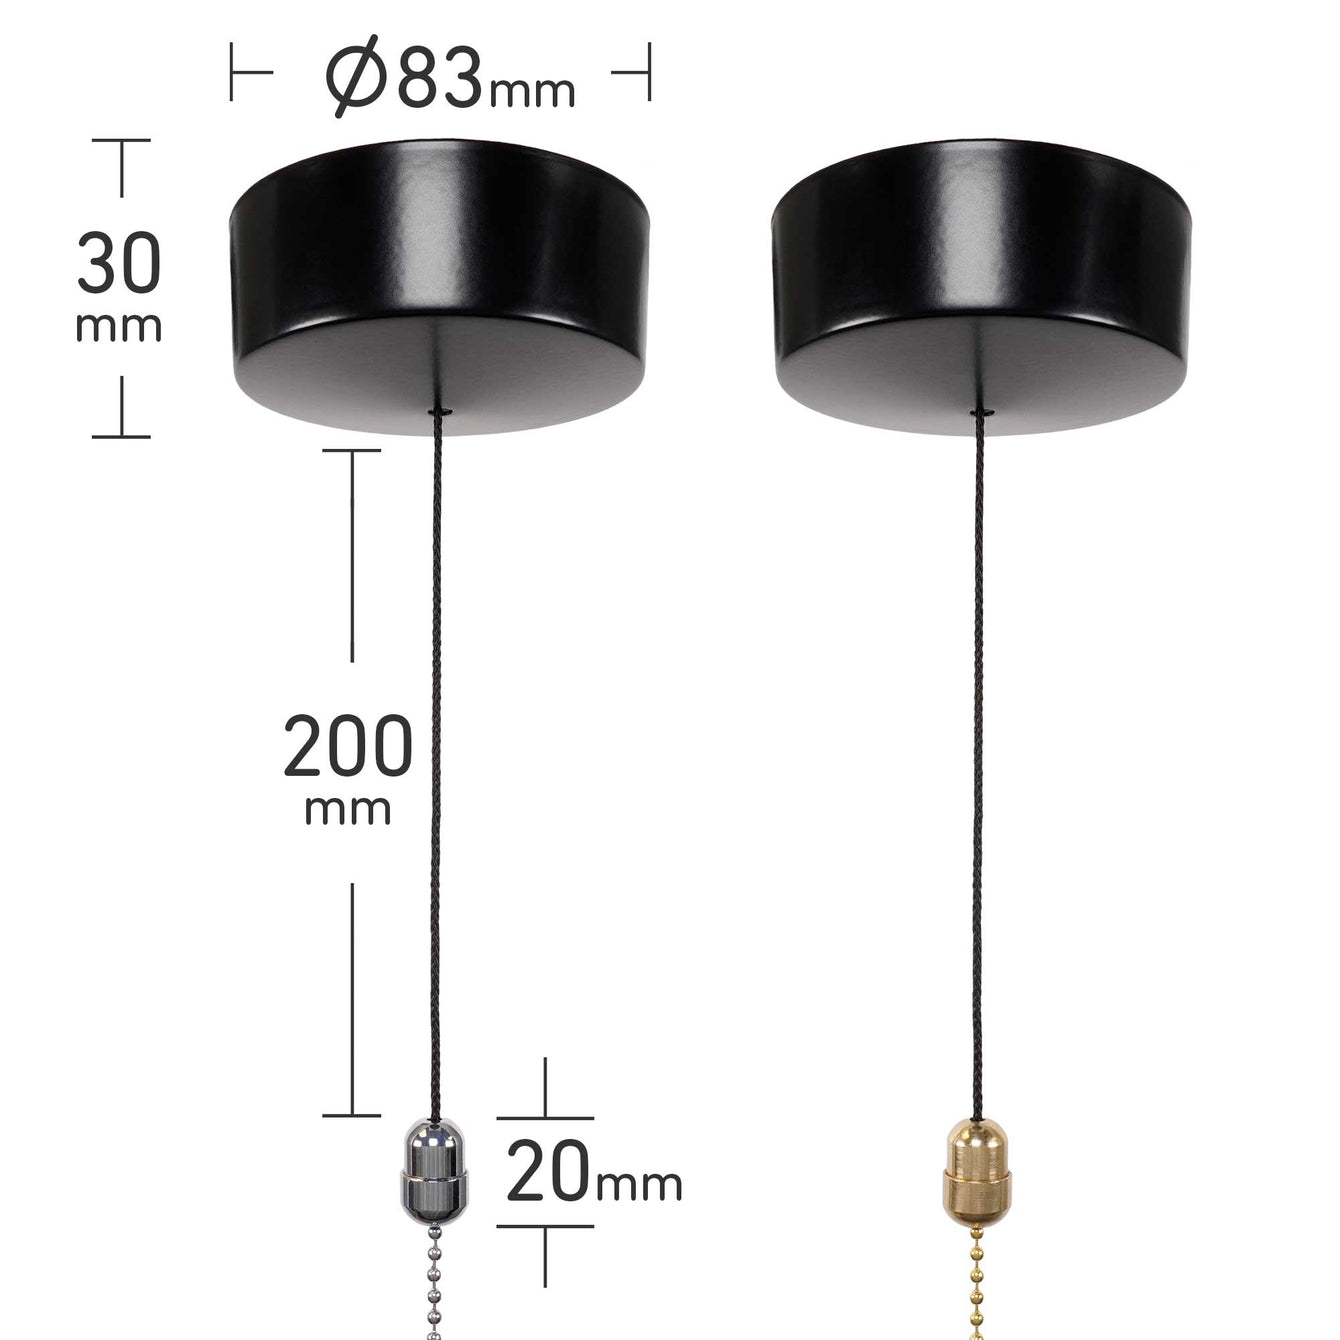 ElekTek Premium Black Bathroom Light Pull Cord Switch Kit with Pull Chain Handle Black Square Bar / Brass